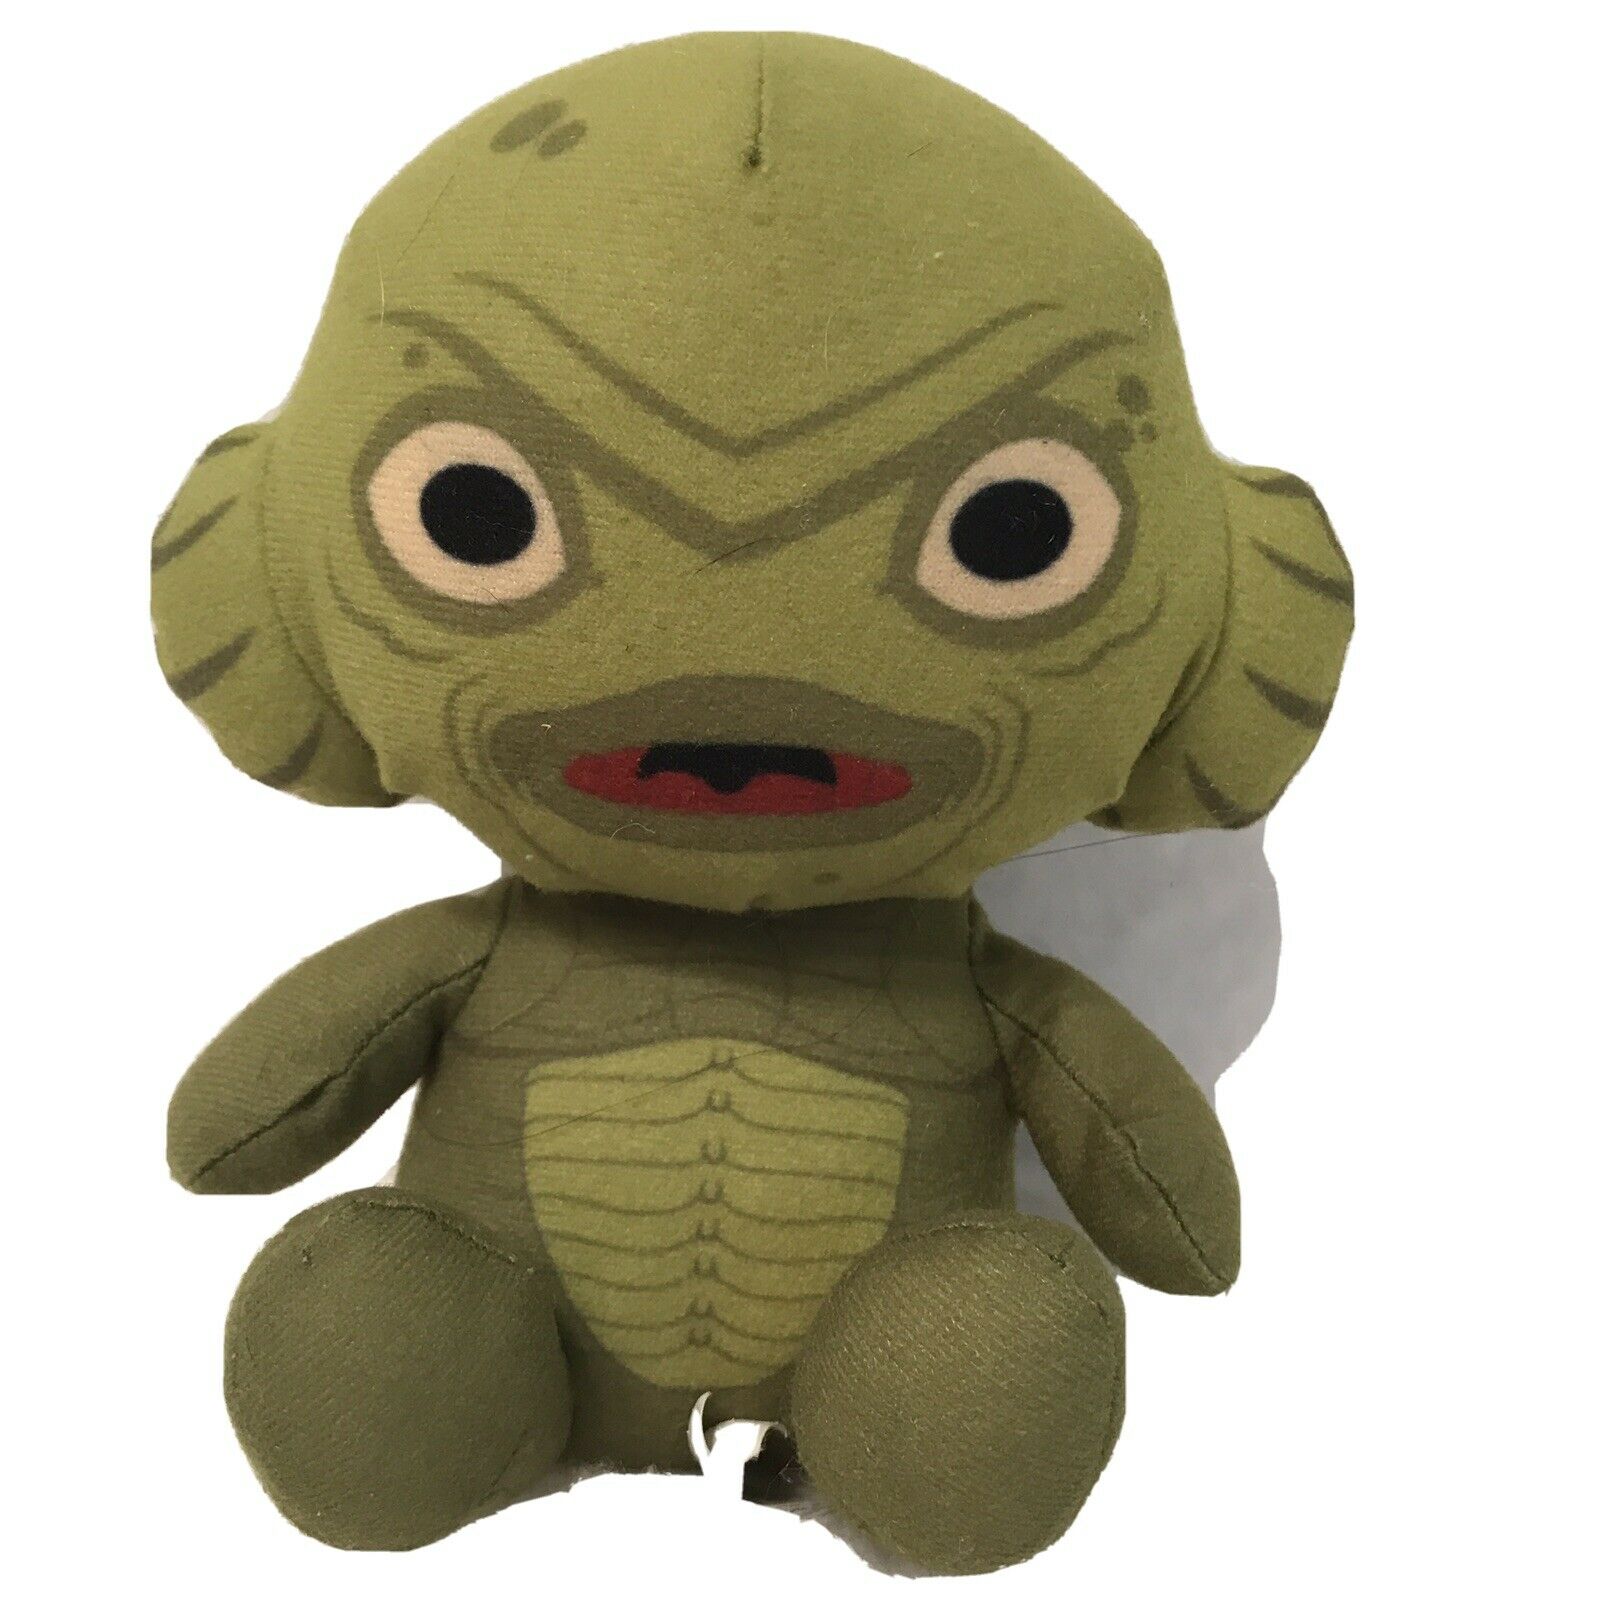 Universal Studios Monsters Creature From The Black Lagoon 7" Plush Stuffed